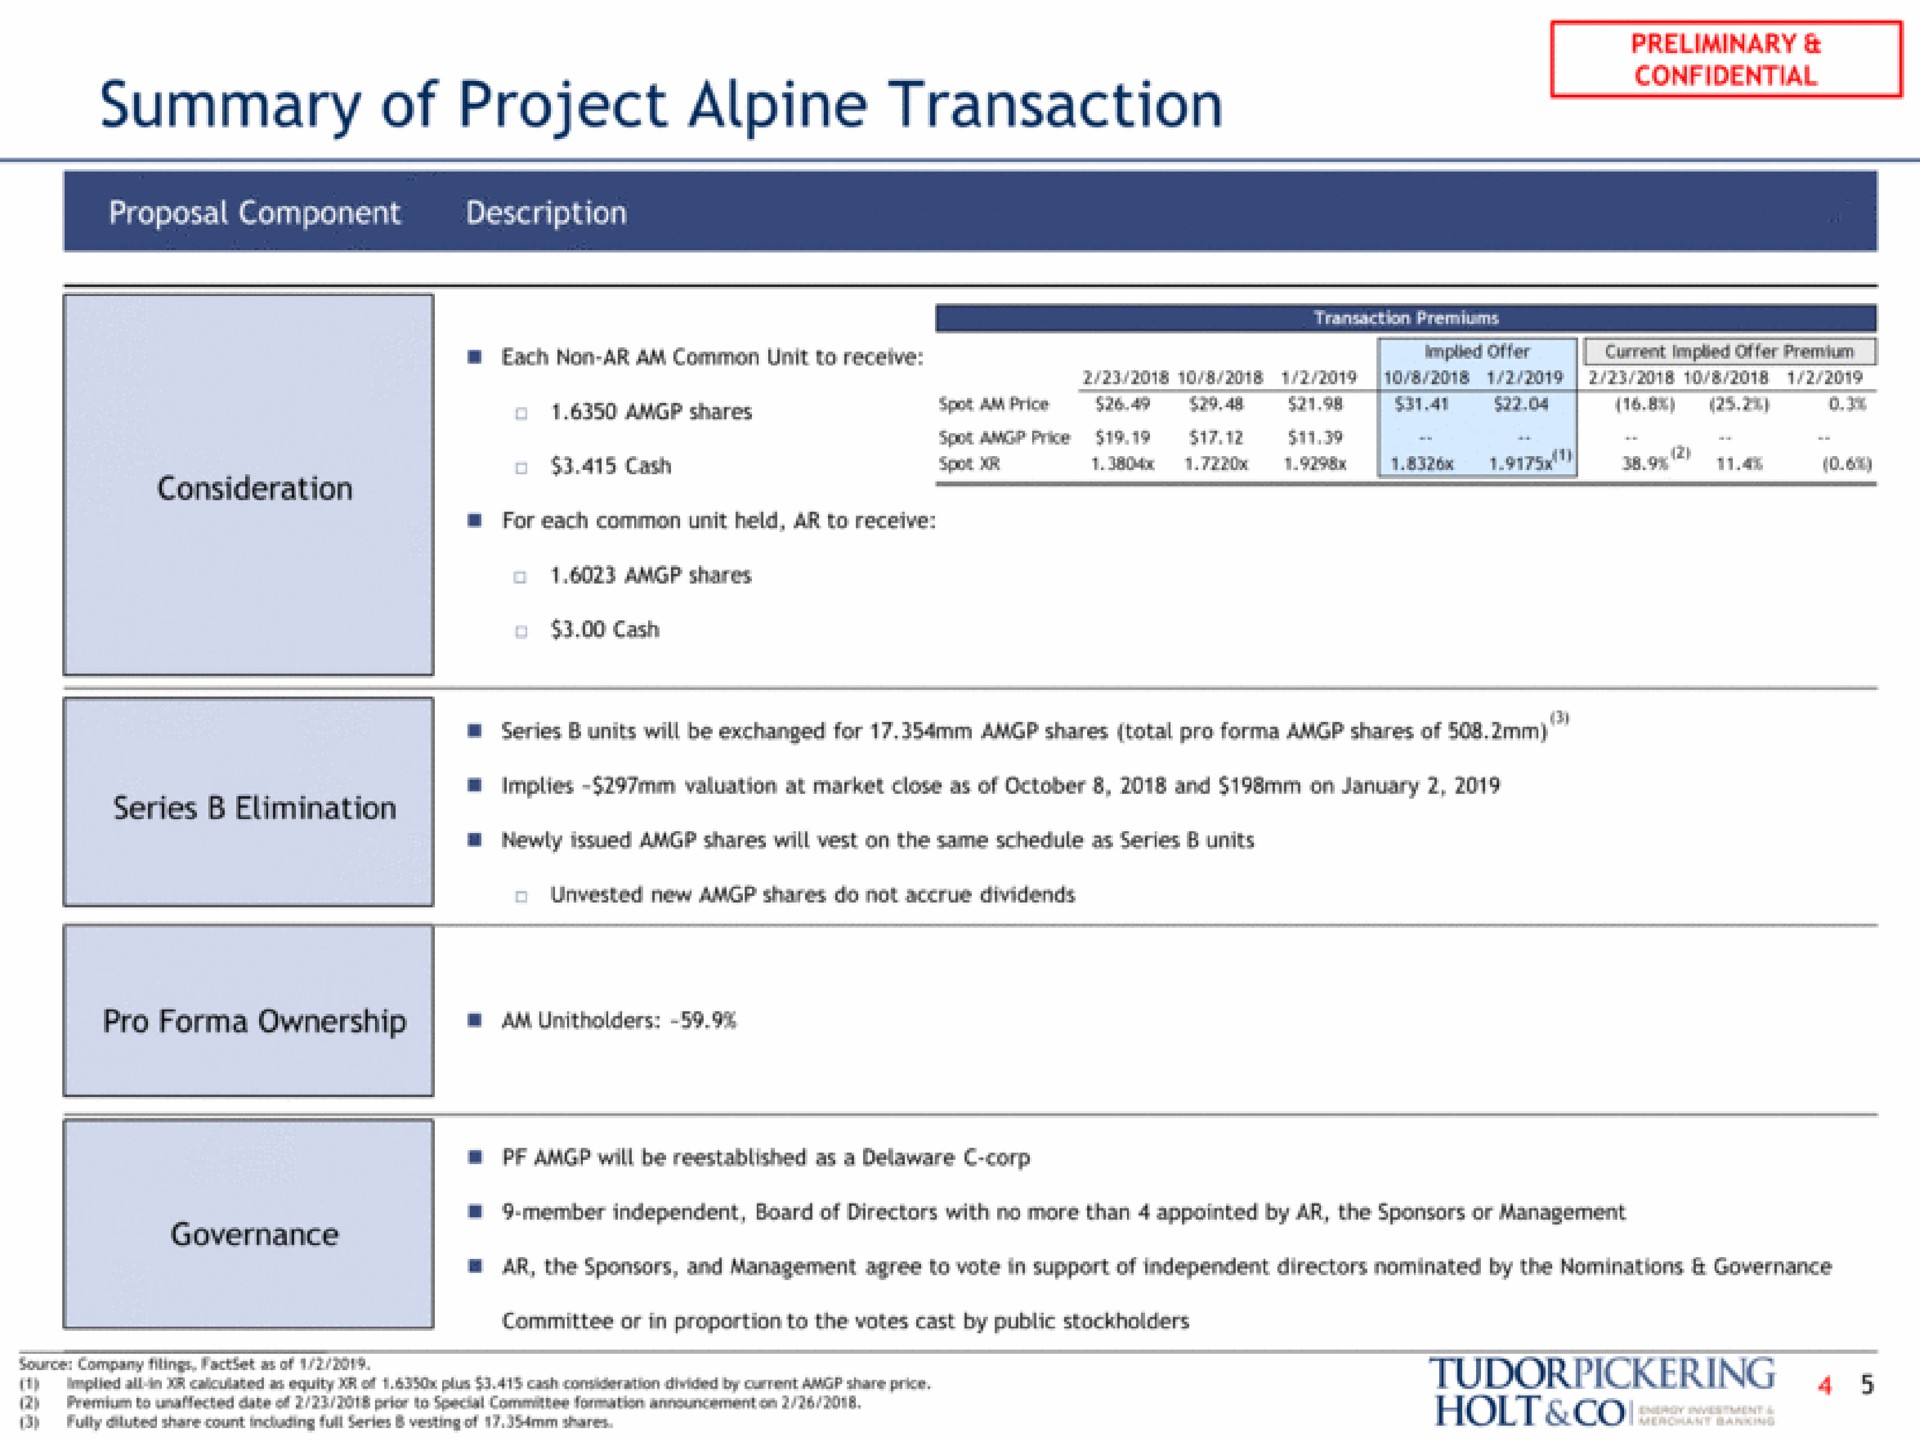 summary of project alpine transaction | Tudor, Pickering, Holt & Co